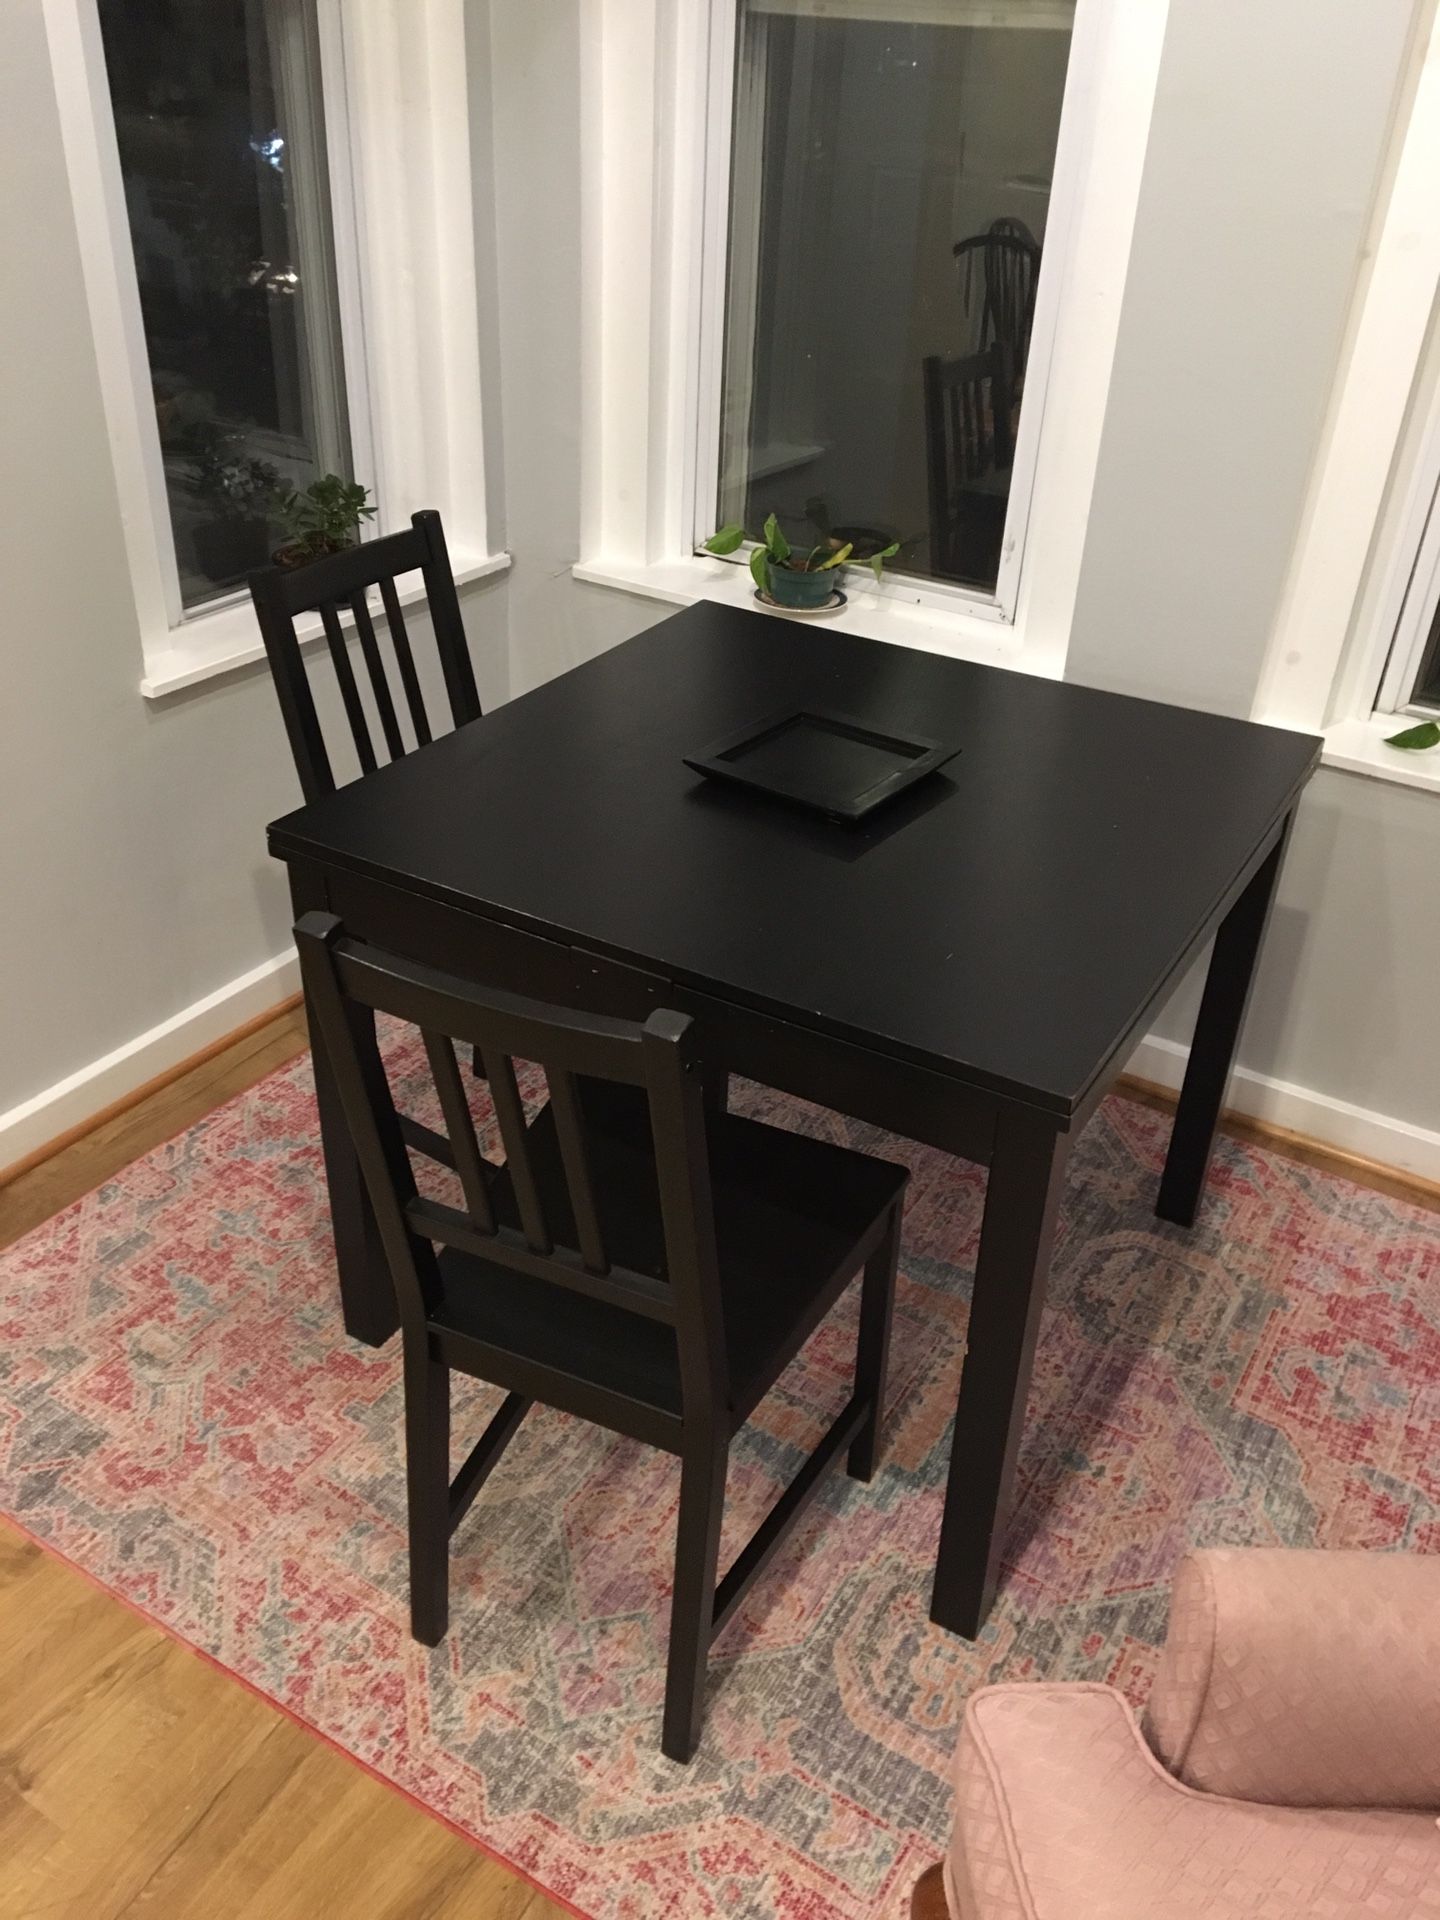 IKEA extendable table